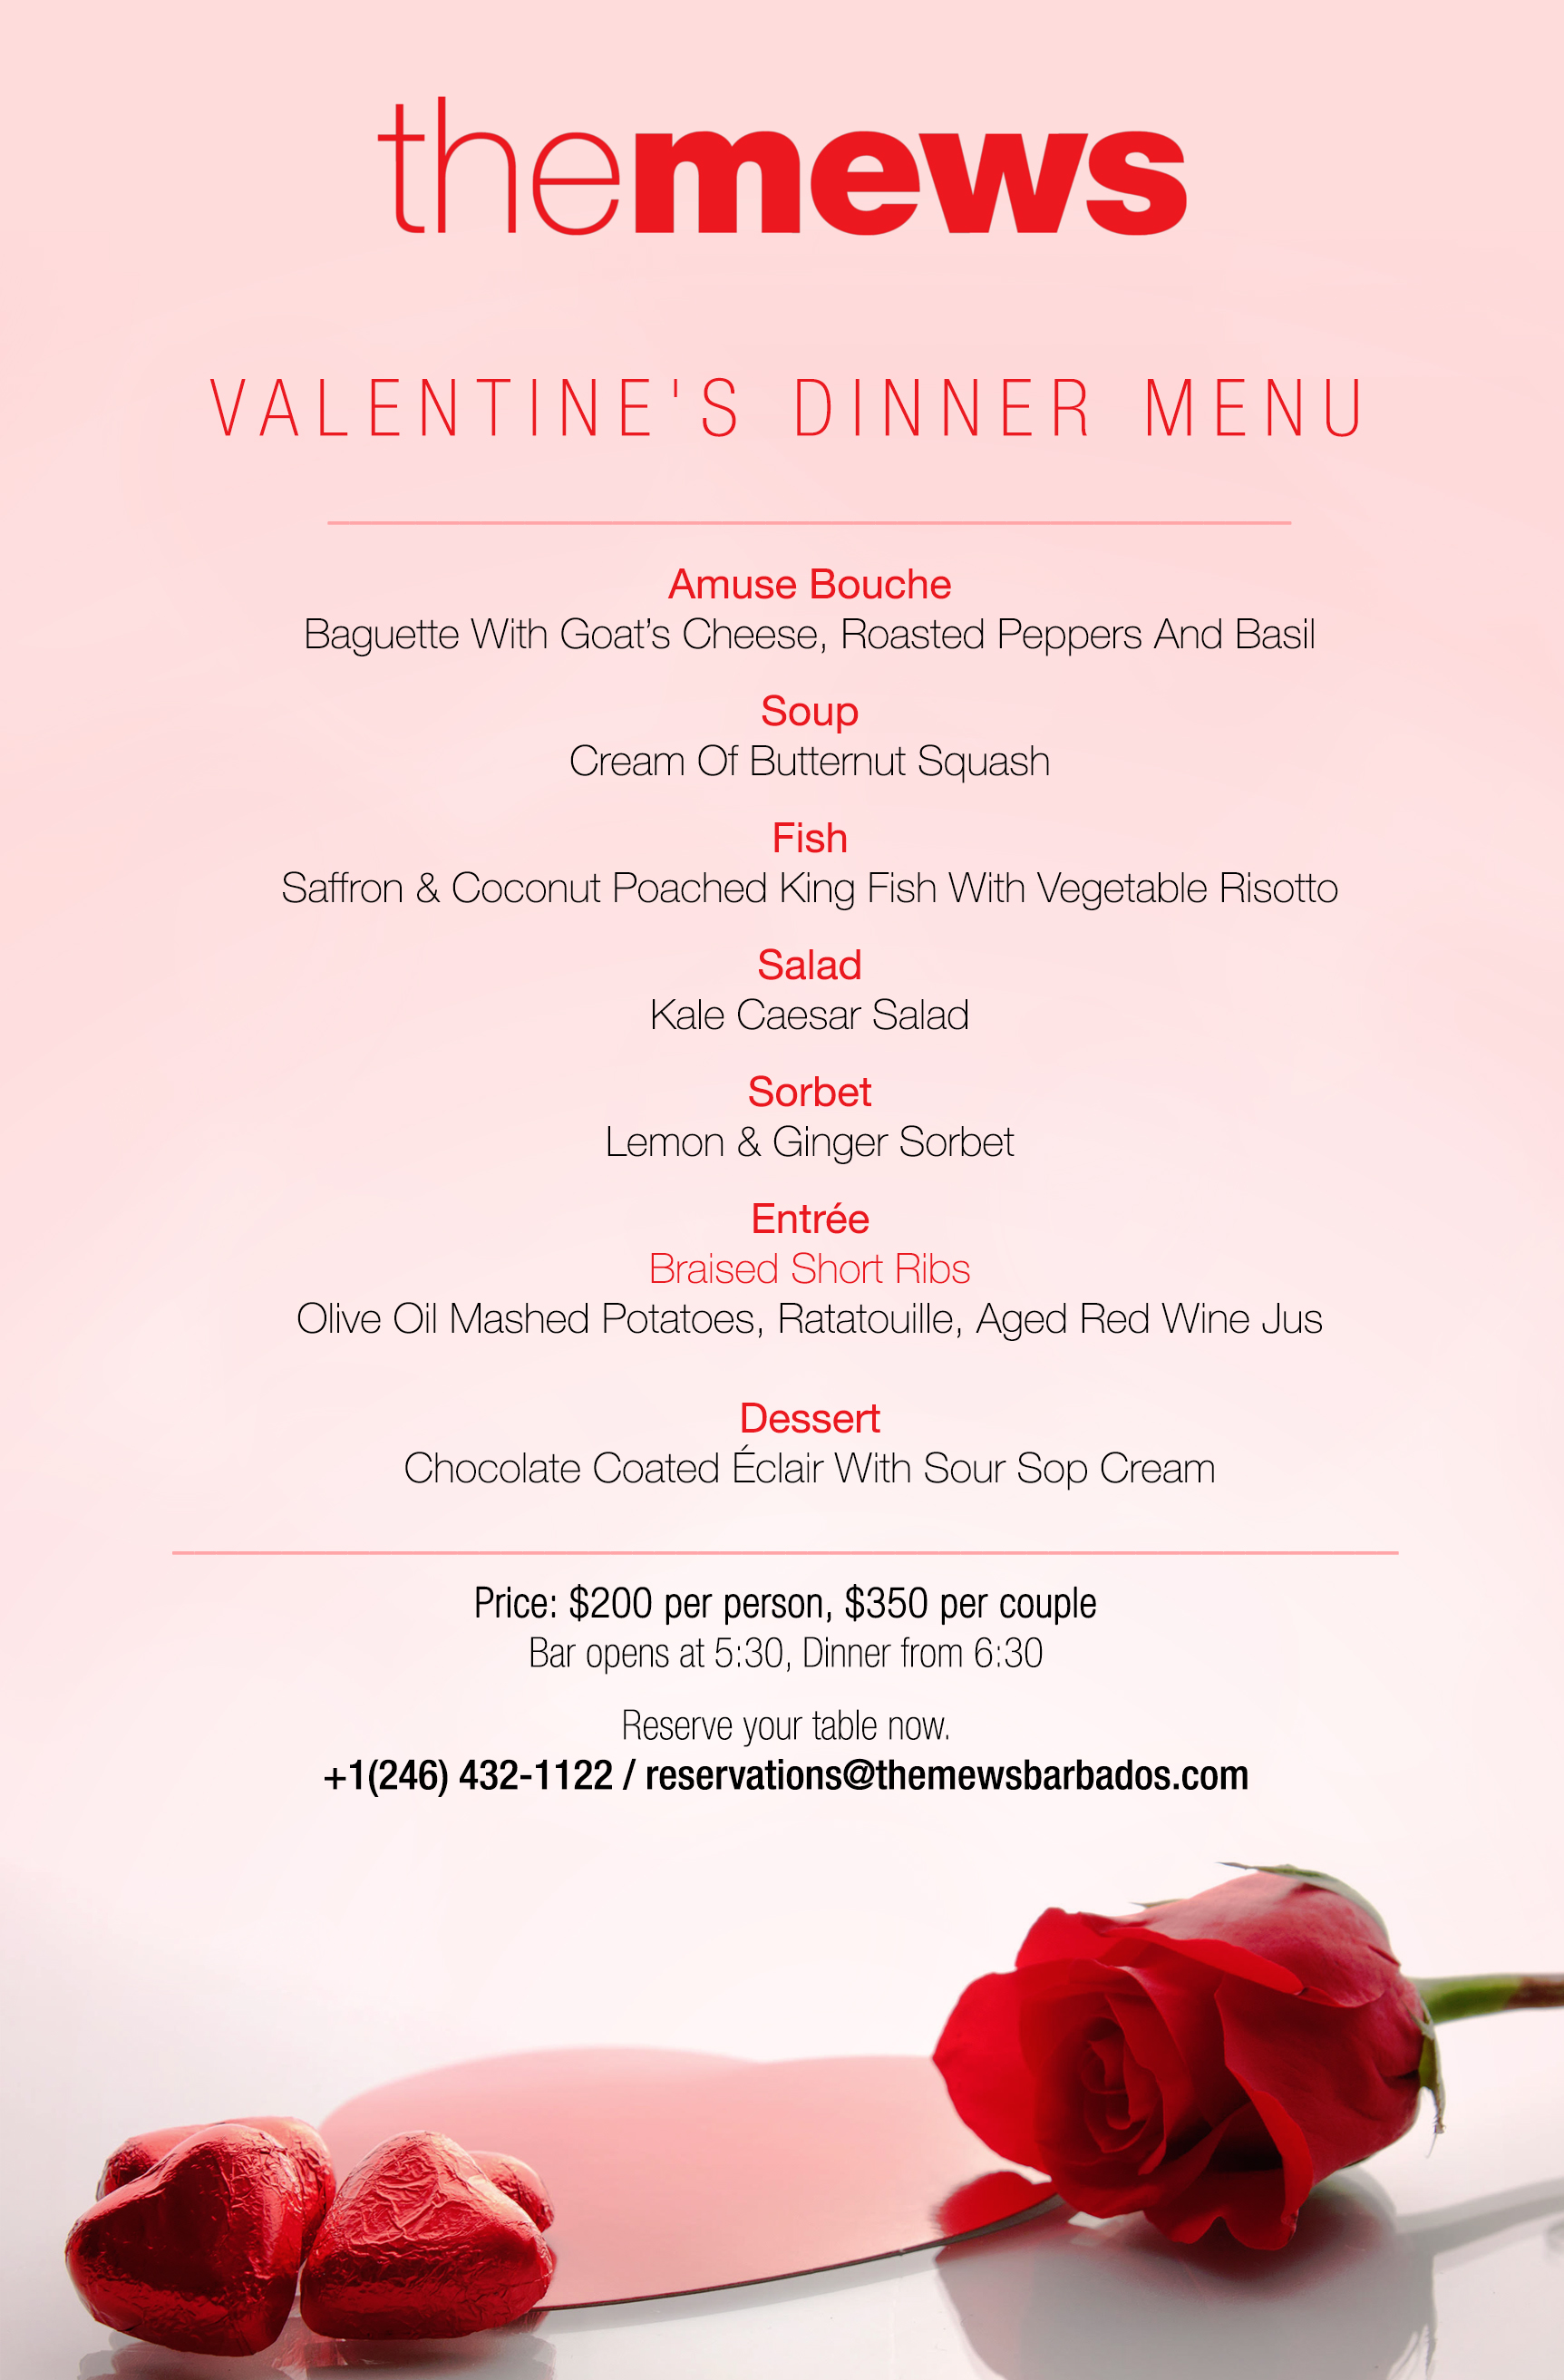 Valentine's Dinner - The Mews Barbados